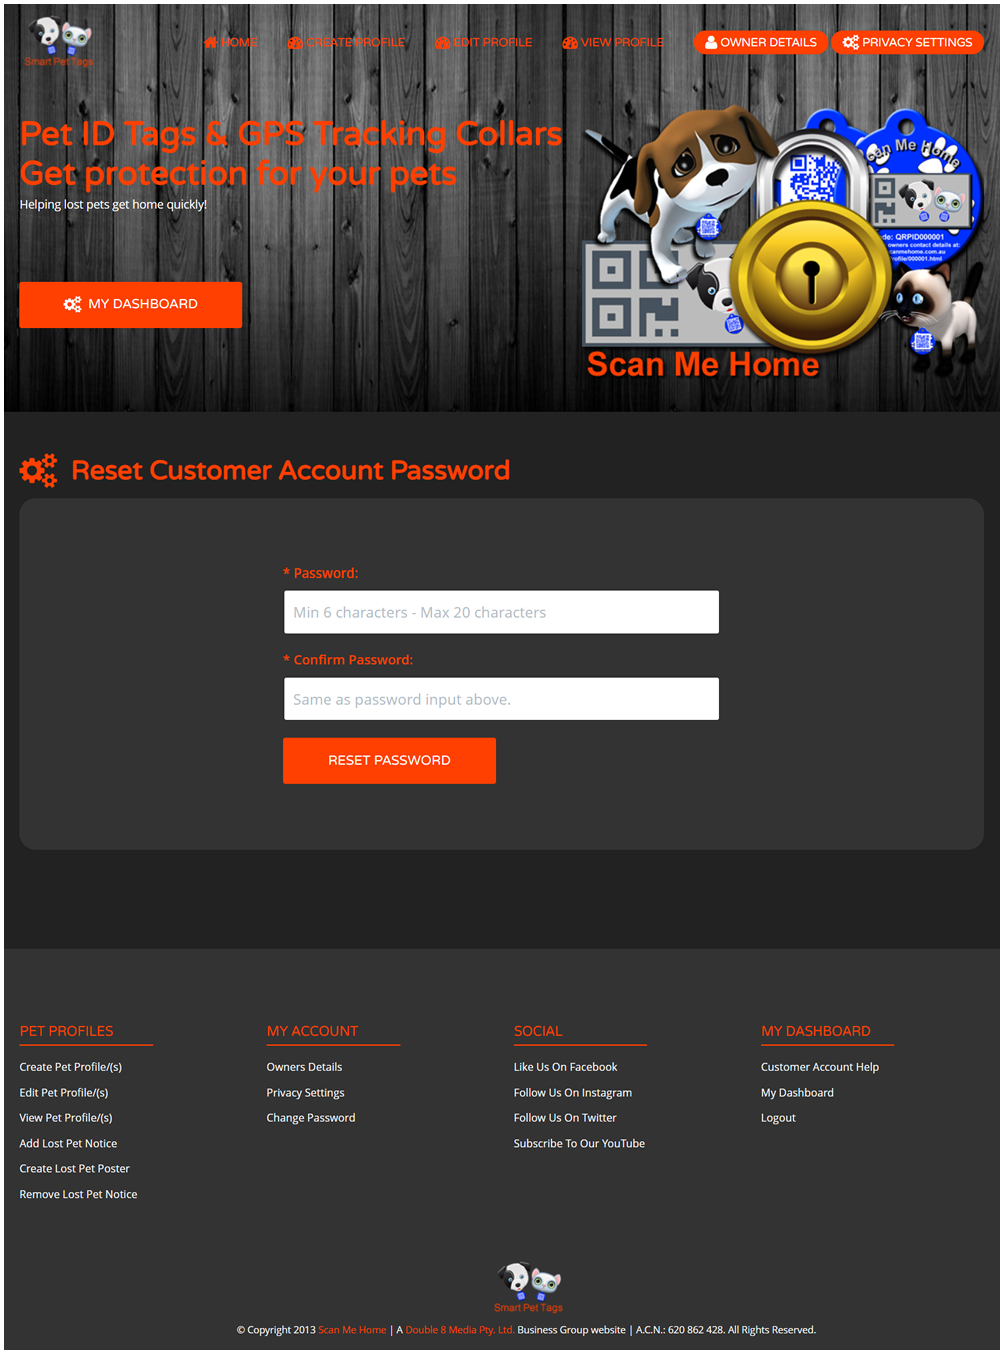 Scan Me Home Customer Account Help My Dashboard Change Password Image 4